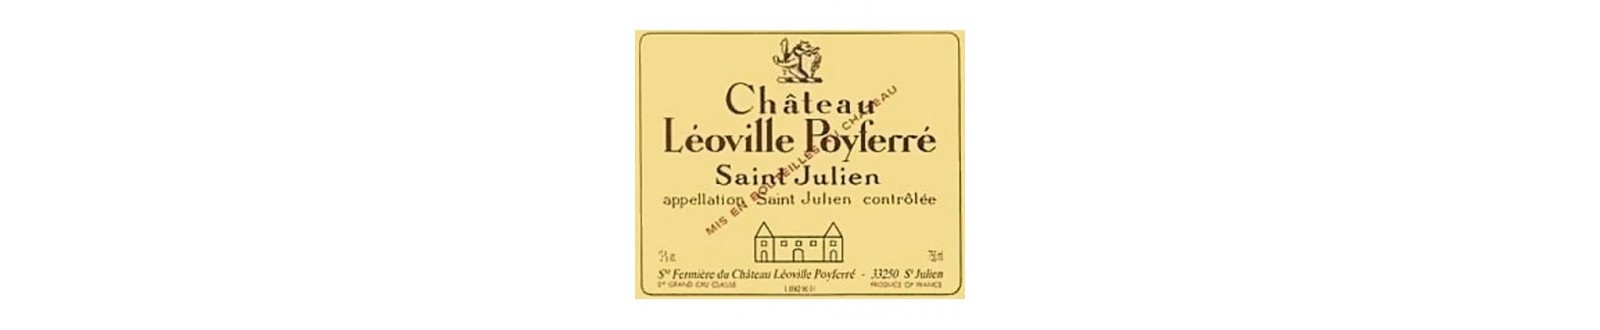 Vin(s) du Château Leoville Poyferre